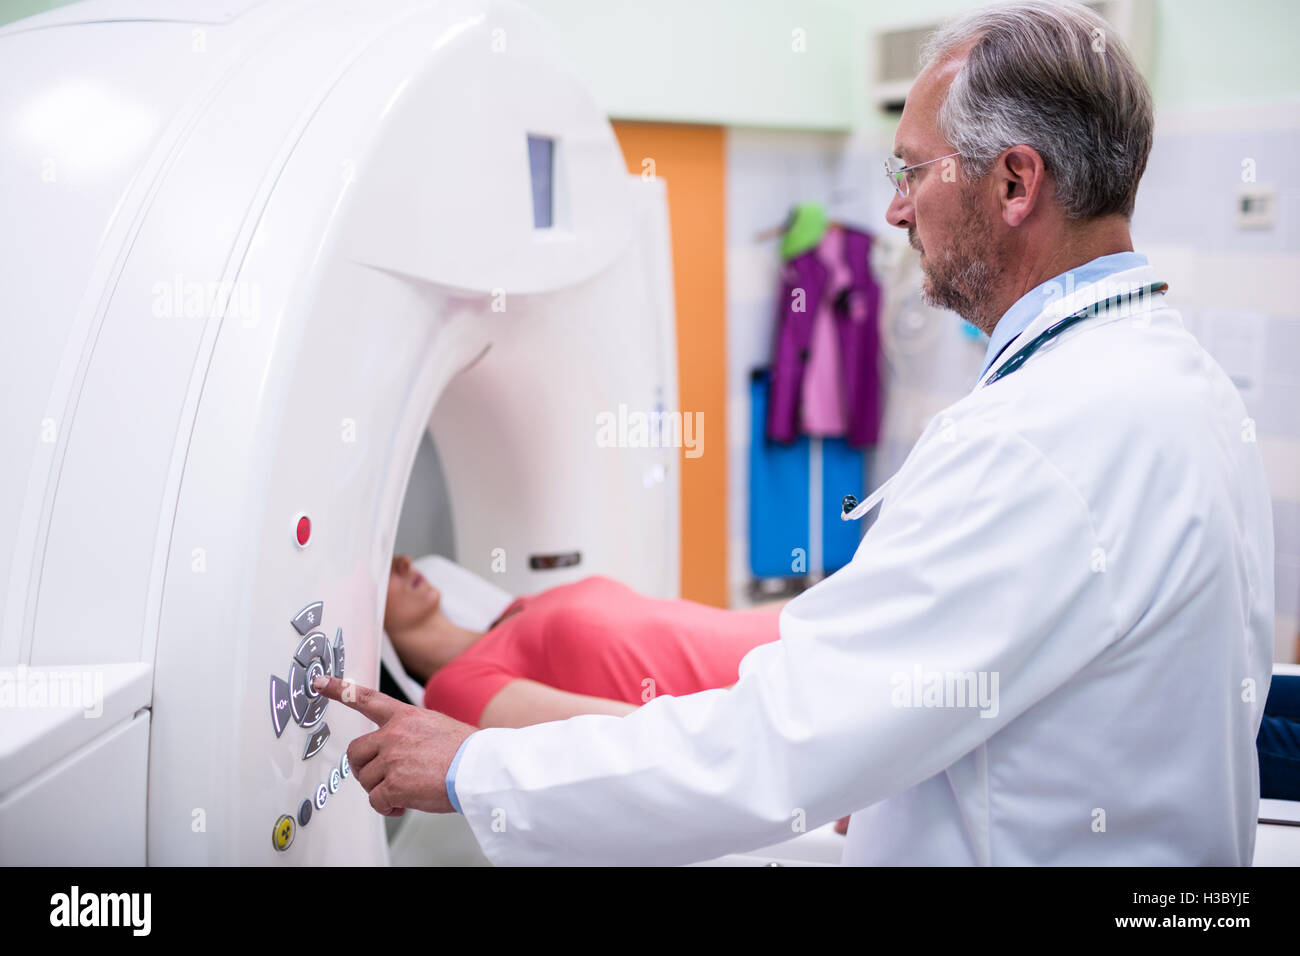 Patient entering mri scan machine Stock Photo